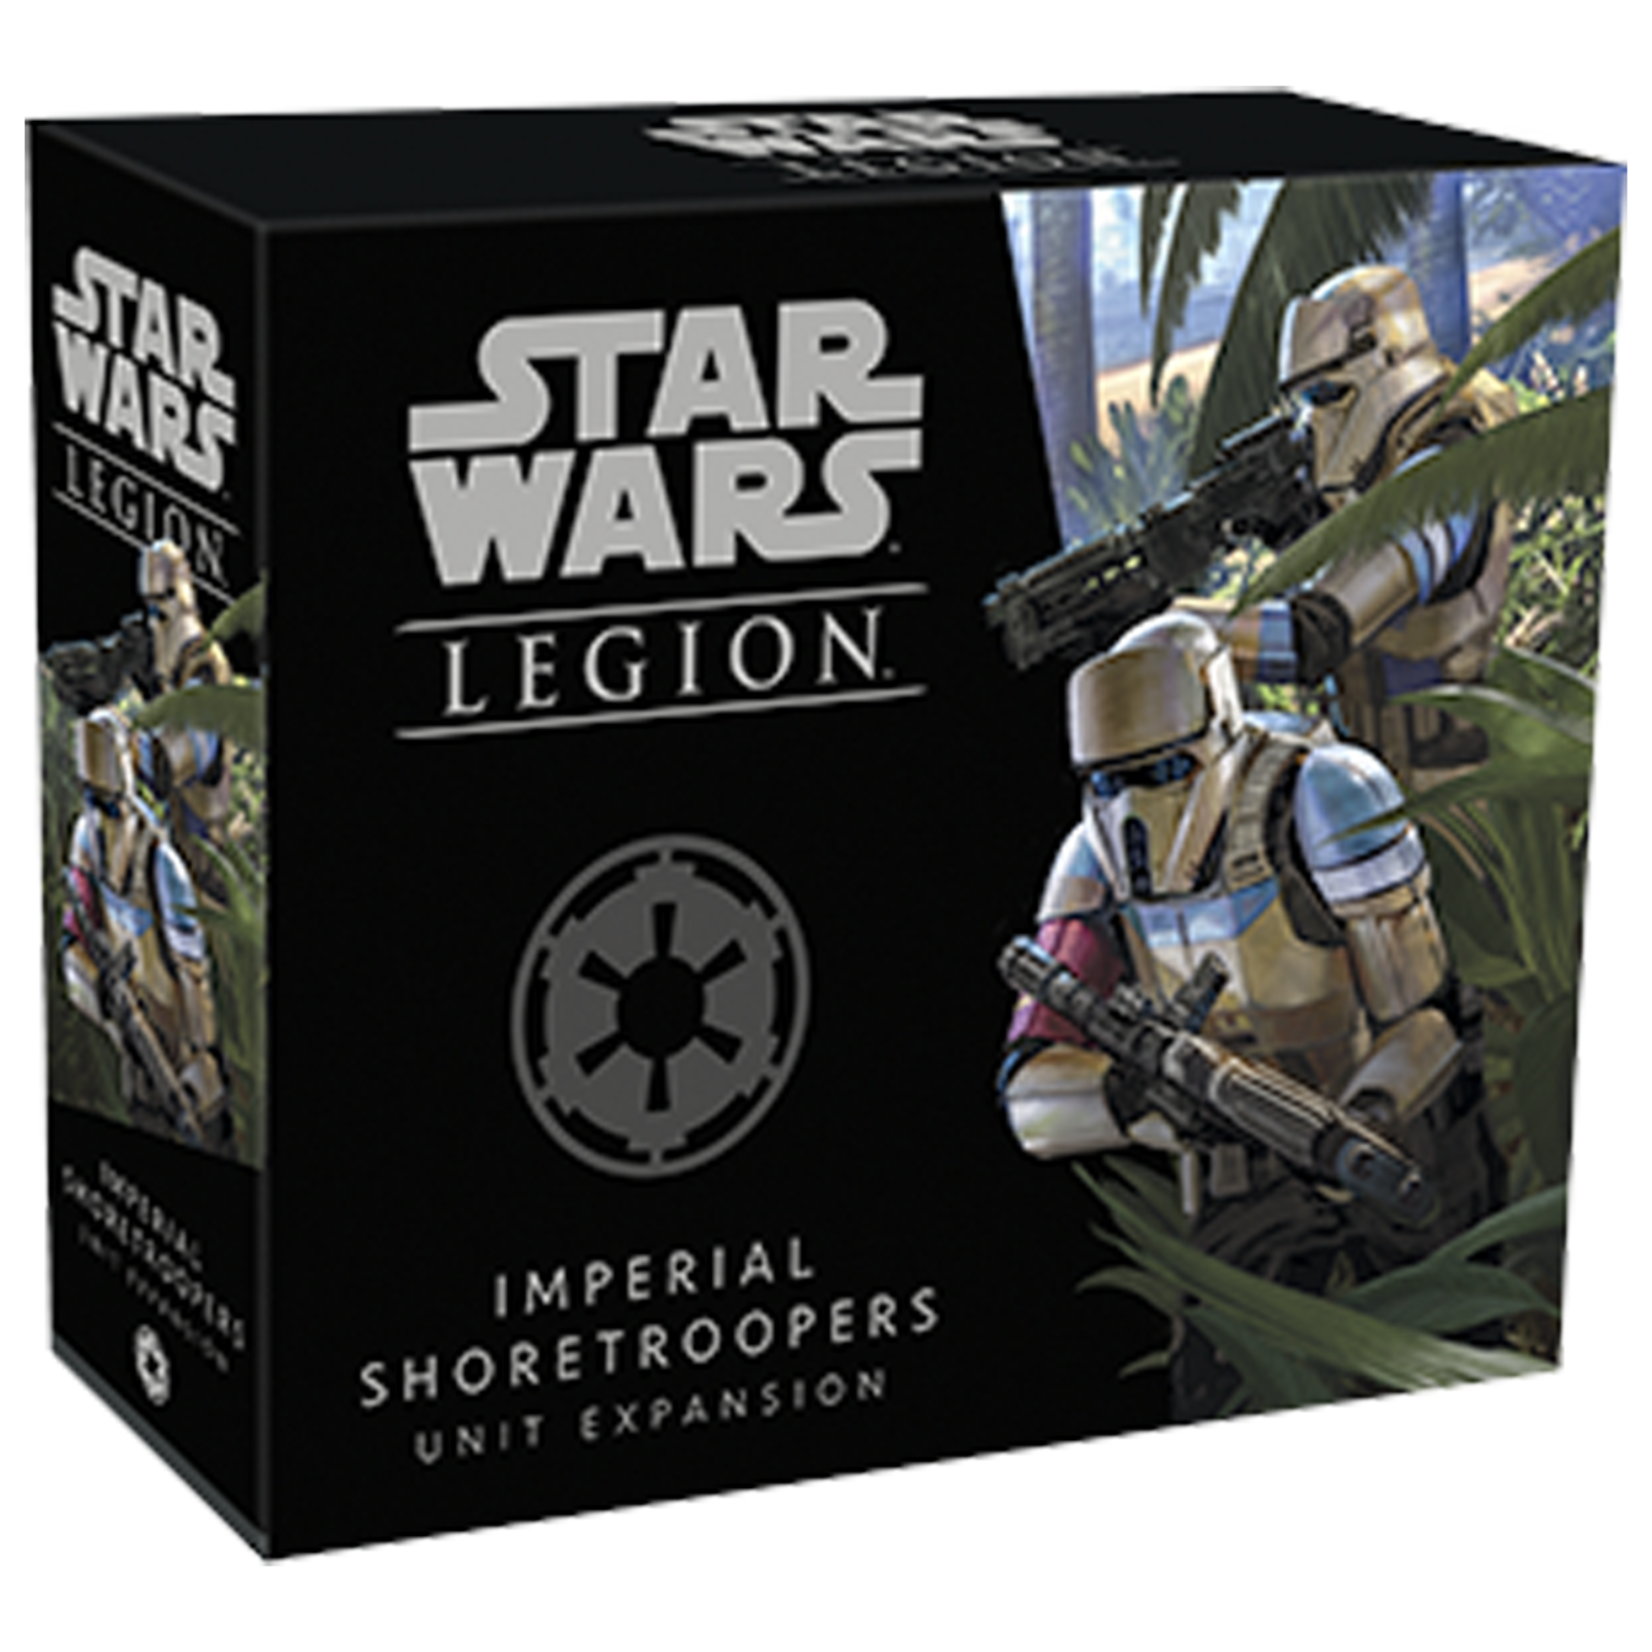 Star Wars Legion: Shoretroopers Unit Expansion